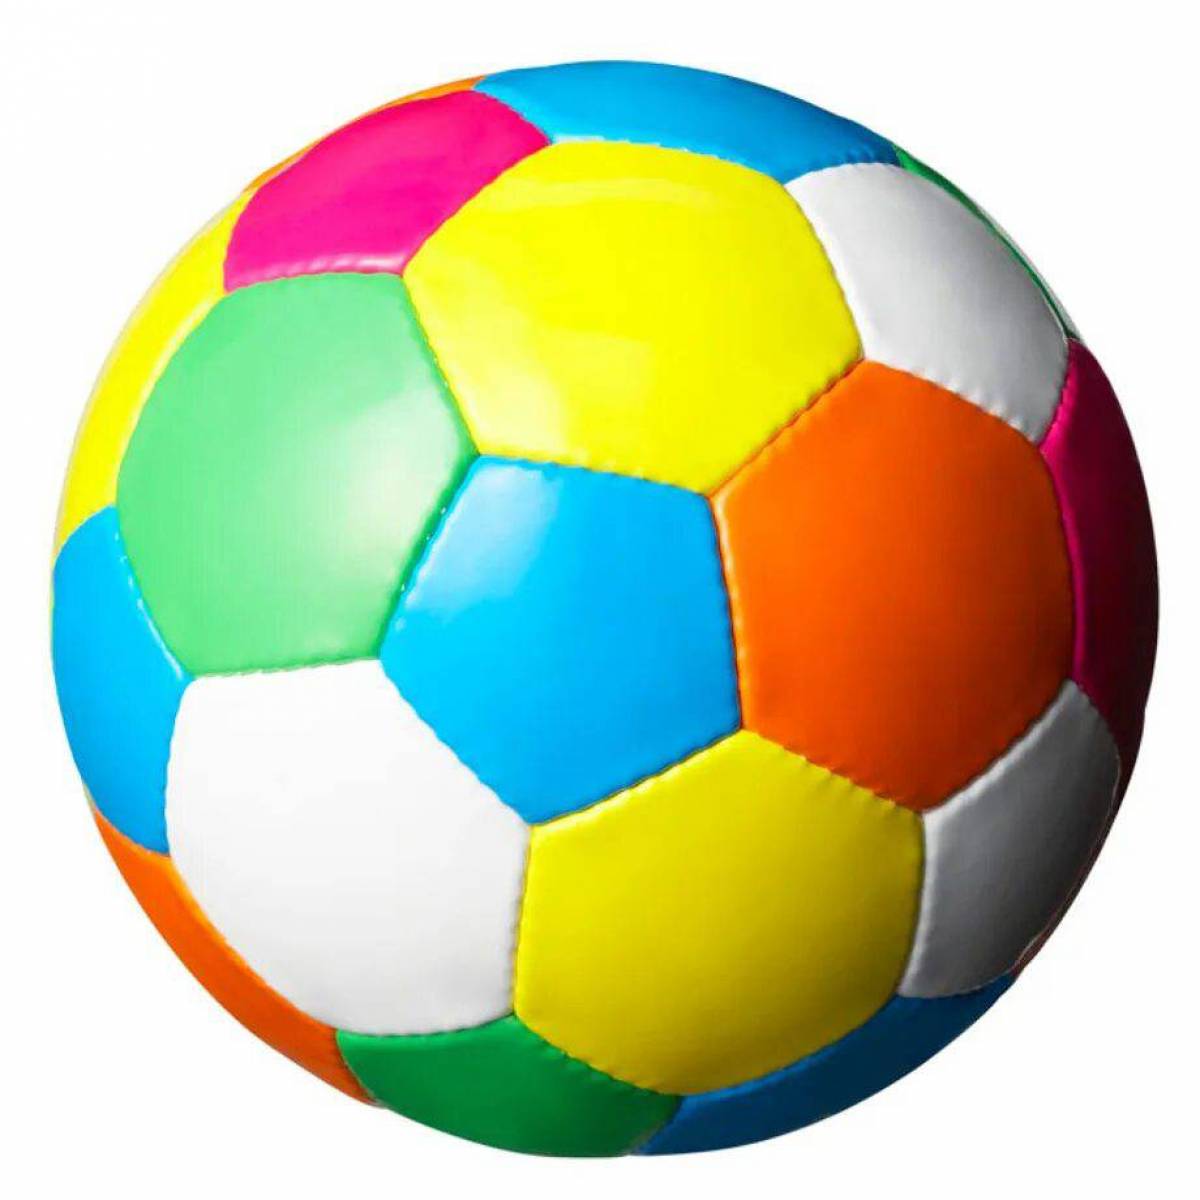 Ball part. Boll-бол-мяч. Мяч картинка для детей. Мячики для детей. Разноцветные мячики.